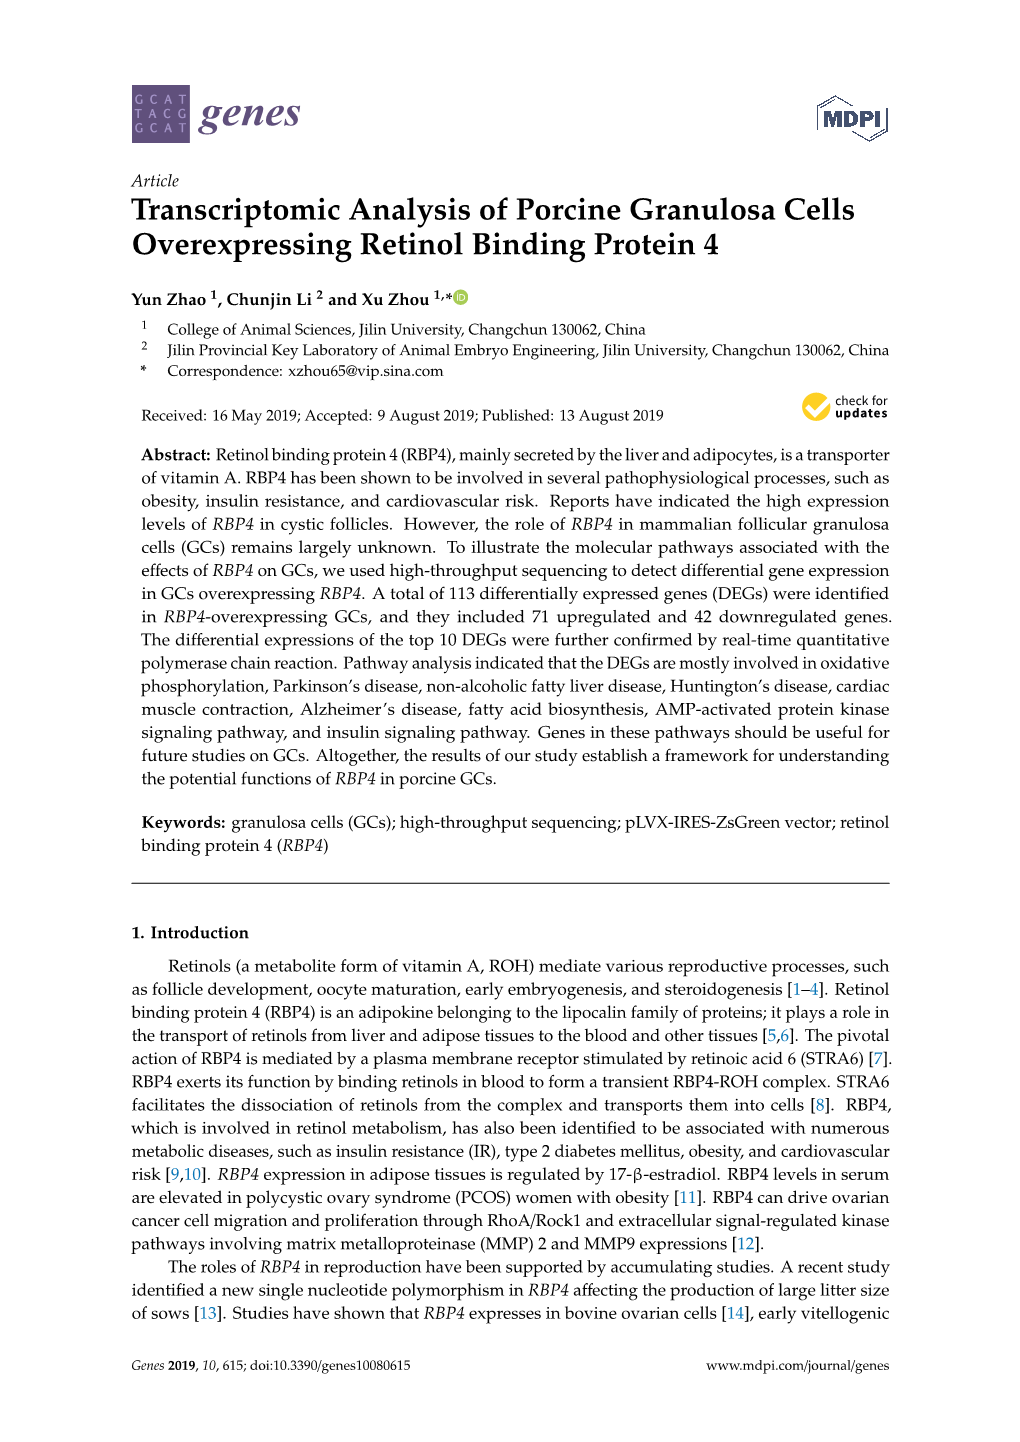 Transcriptomic Analysis of Porcine Granulosa Cells Overexpressing Retinol Binding Protein 4